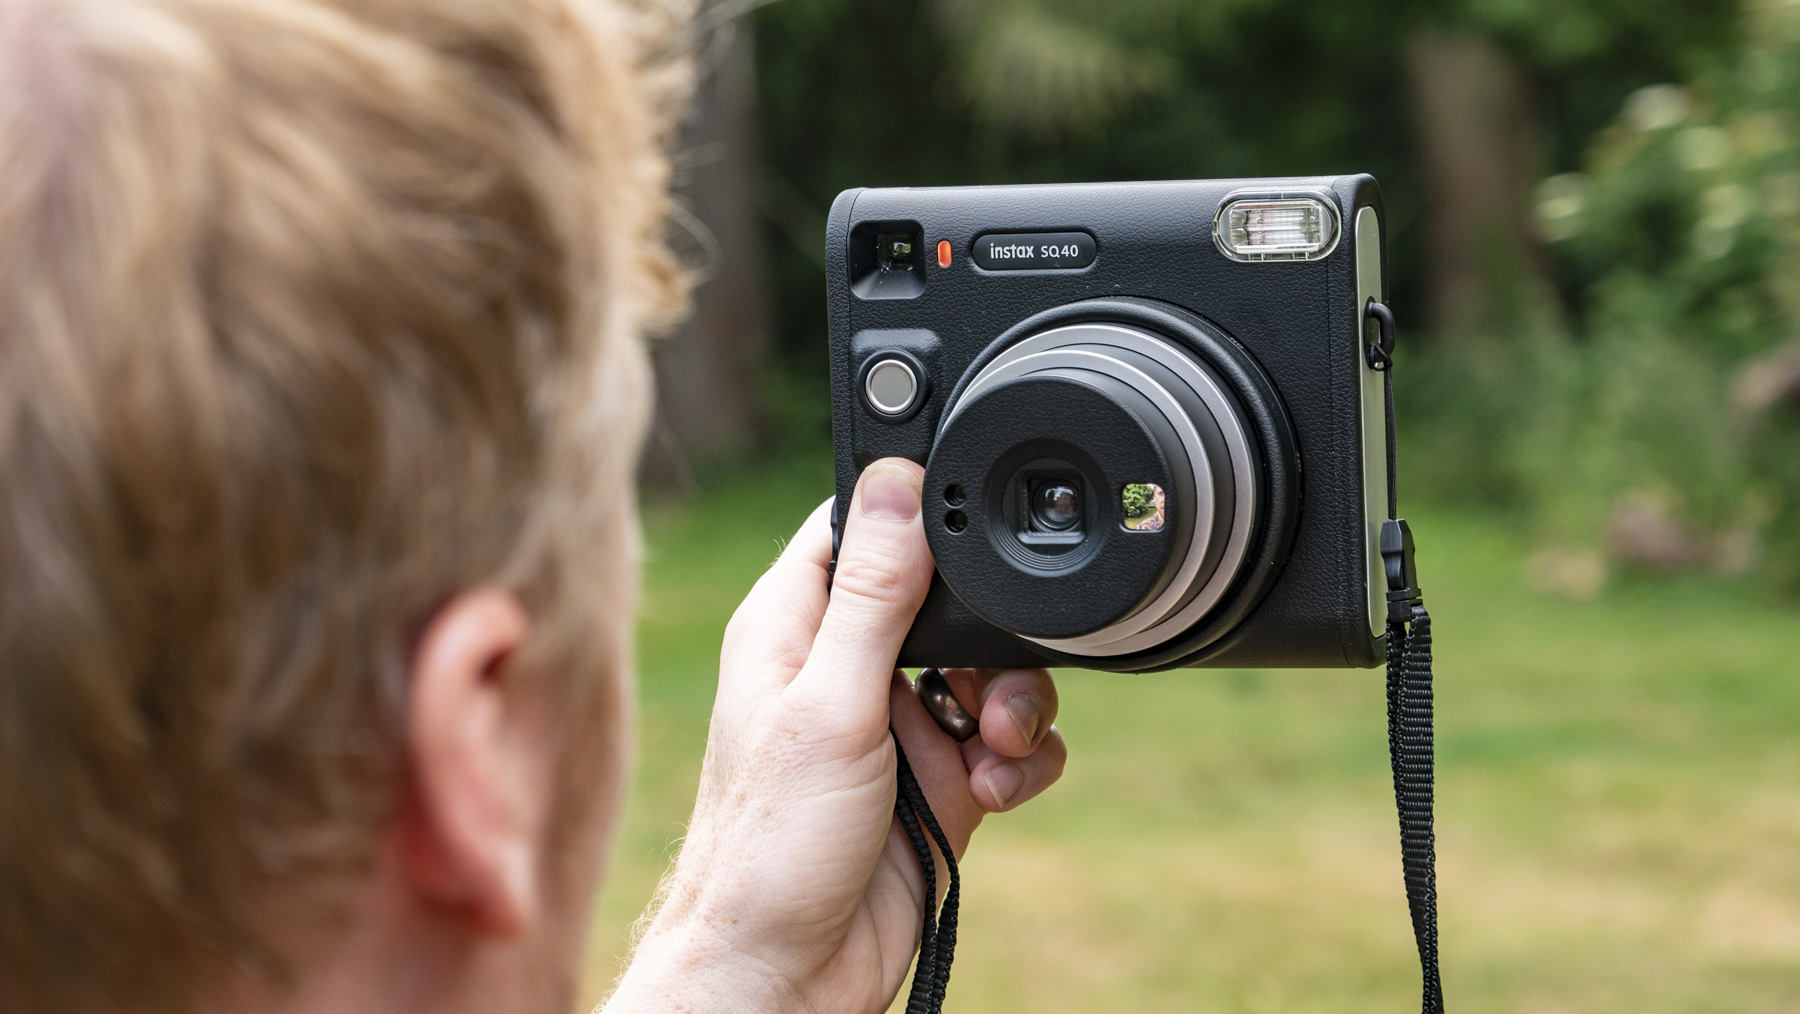 Fujifilm Instax SQ40 camera taking a selife